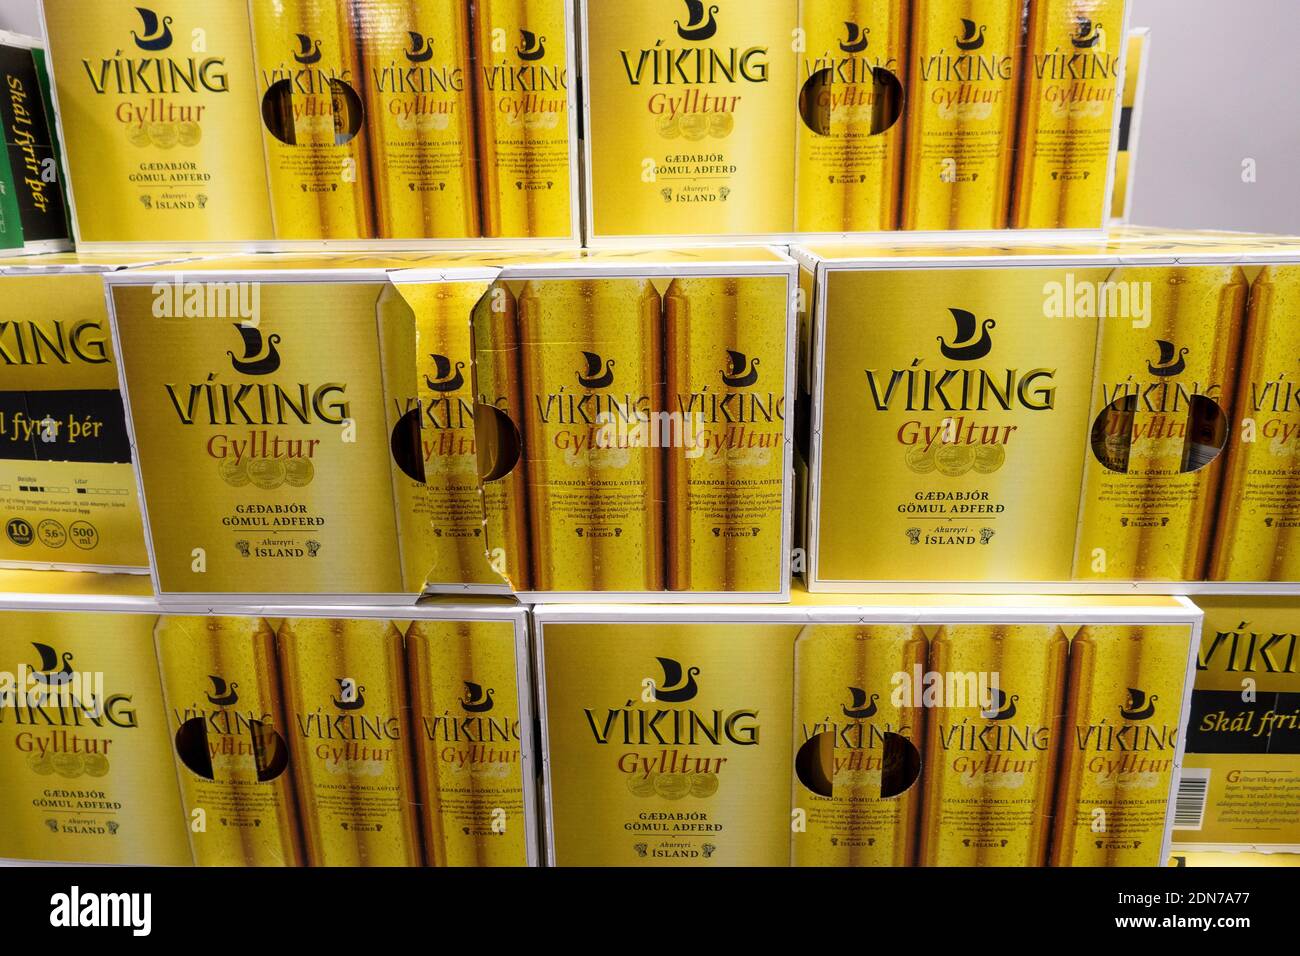 Display Of Icelandic Viking Beer Viking Gylltur In The State Run Vinbudin Liquor Store Iceland Stock Photo